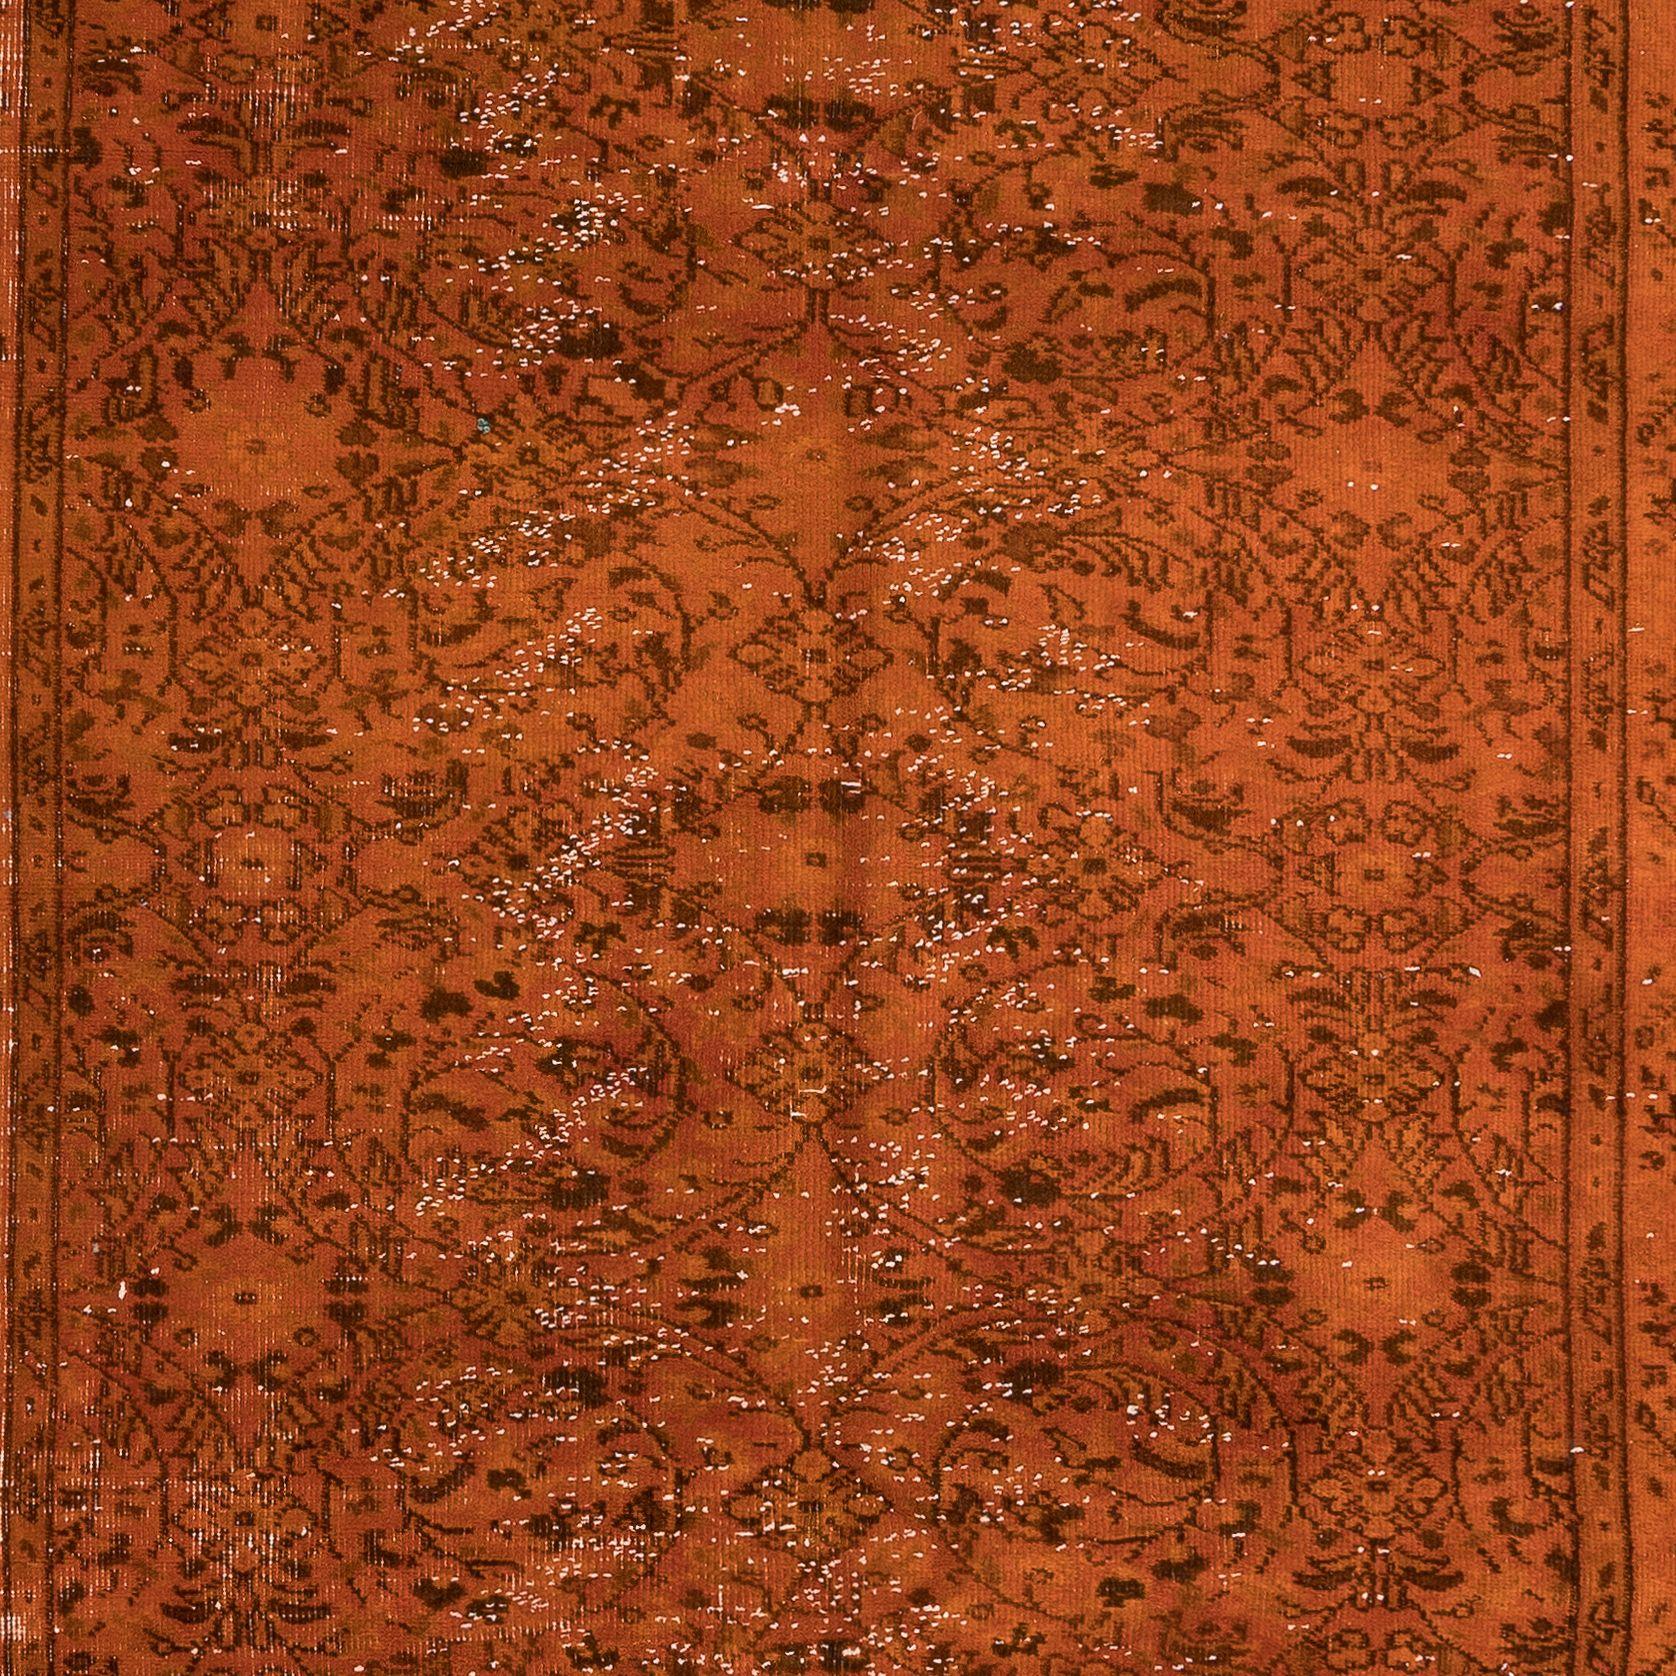 Hand-Woven 4.8x8.3 Ft Handmade Orange Area Rug from Turkey, Modern Anatolian Wool Carpet For Sale